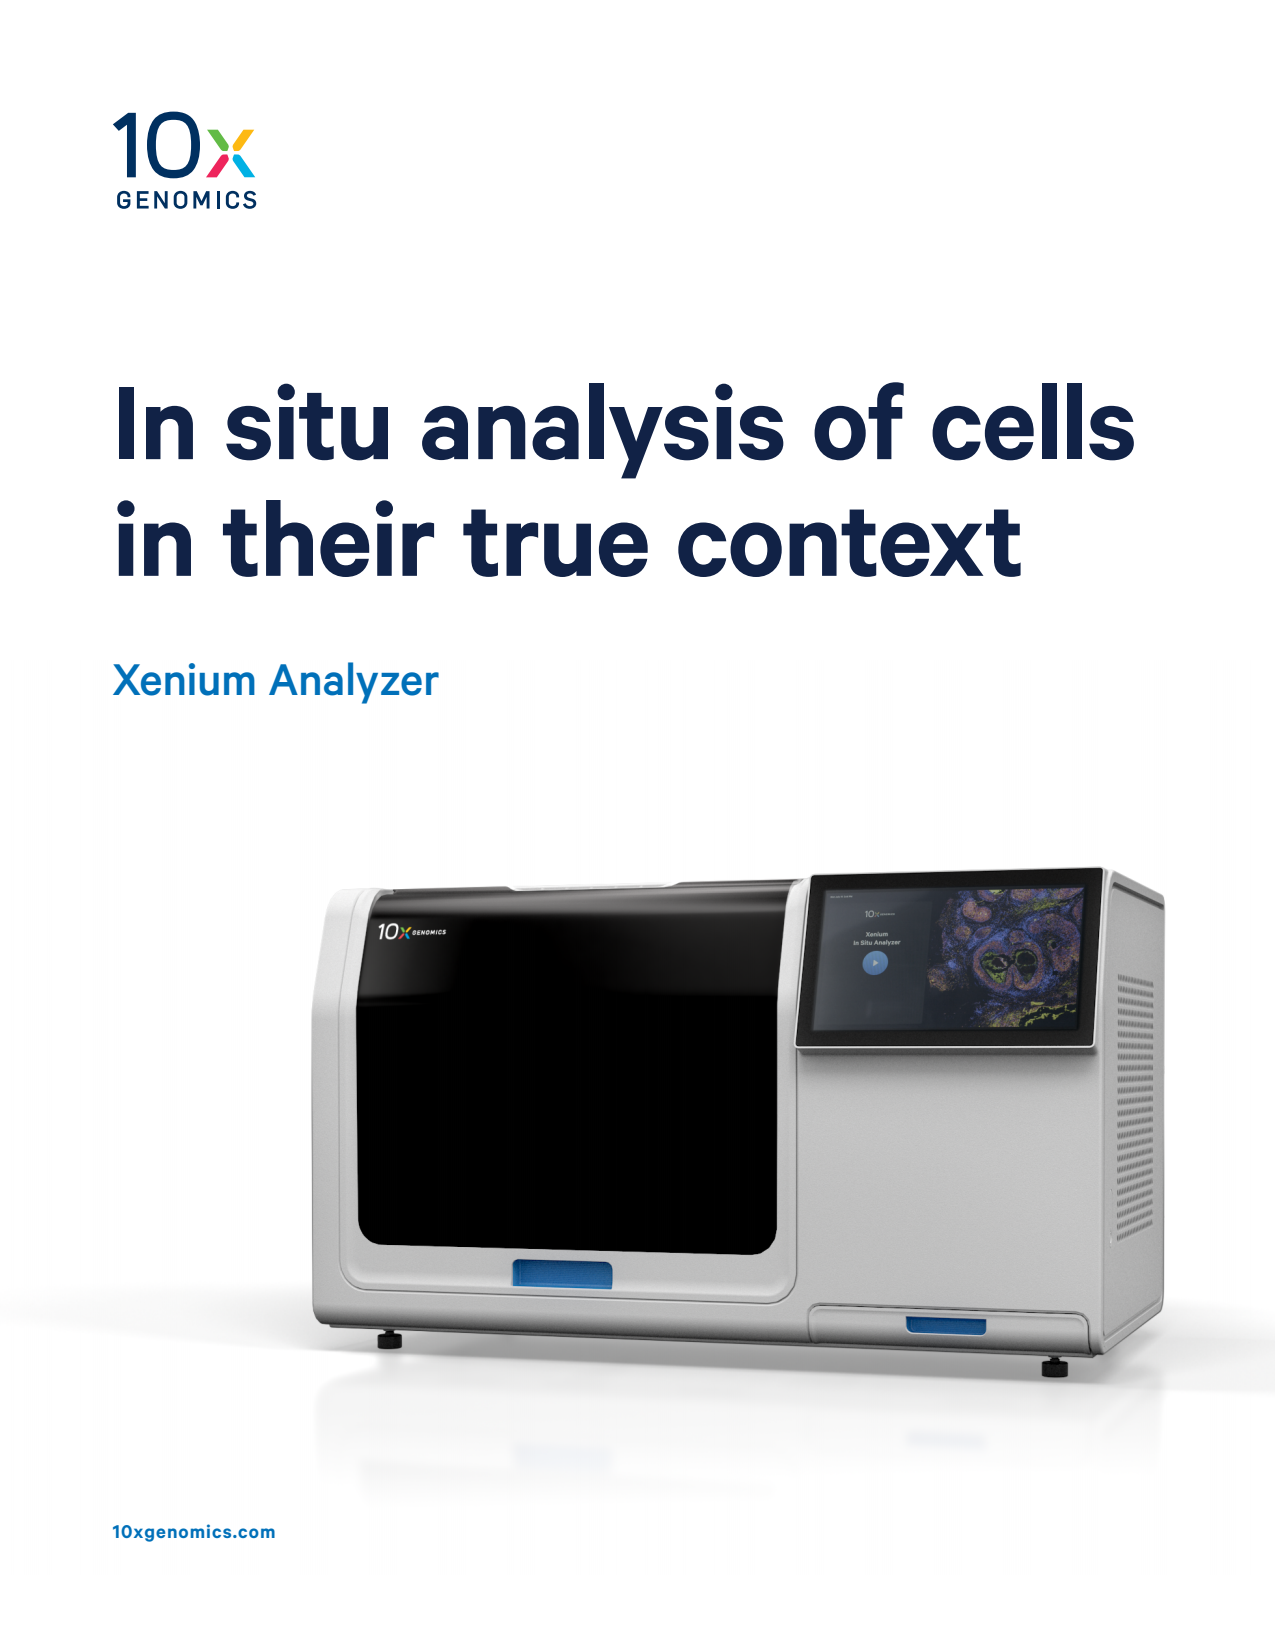 Xenium brochure: In situ analysis of cells in their true context